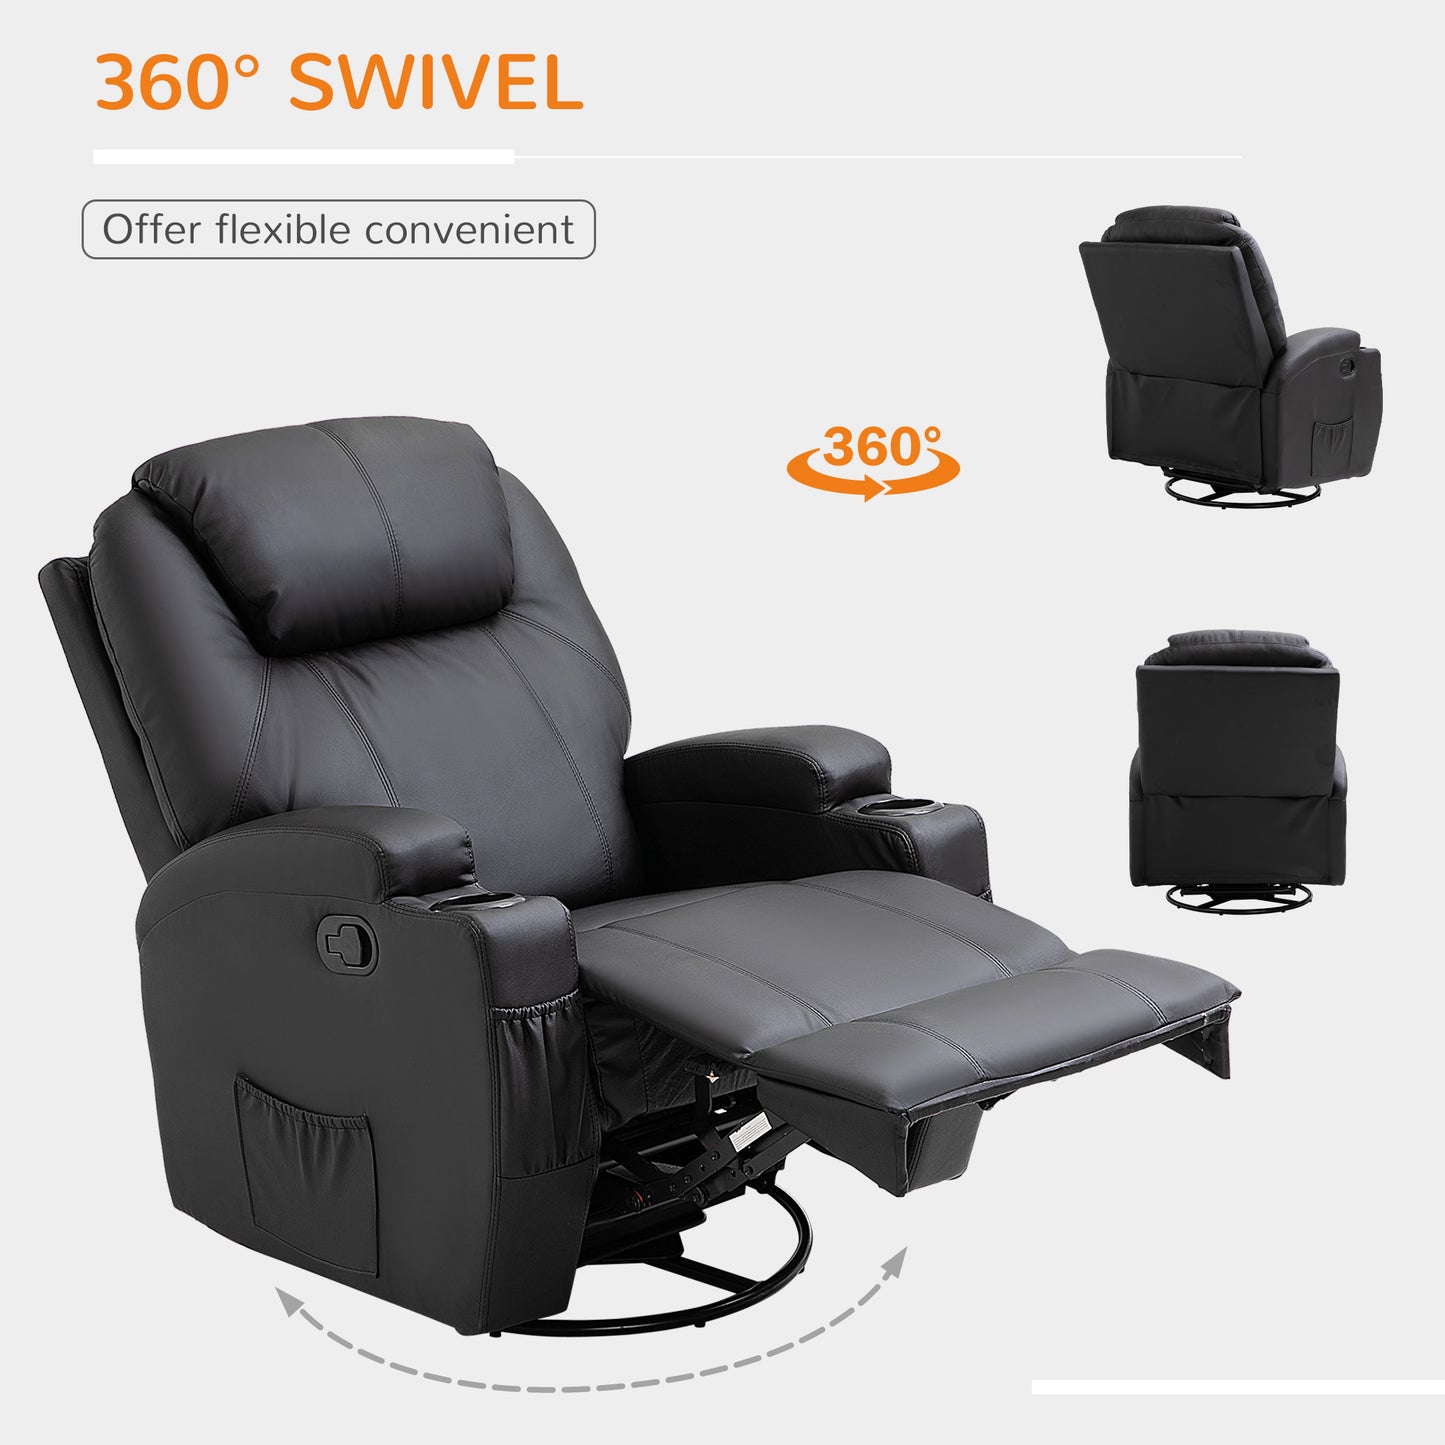 HOMCOM Recliner Sofa Chair PU Leather Armchair Cinema Massage Chair Swivel Nursing Gaming Chair Black